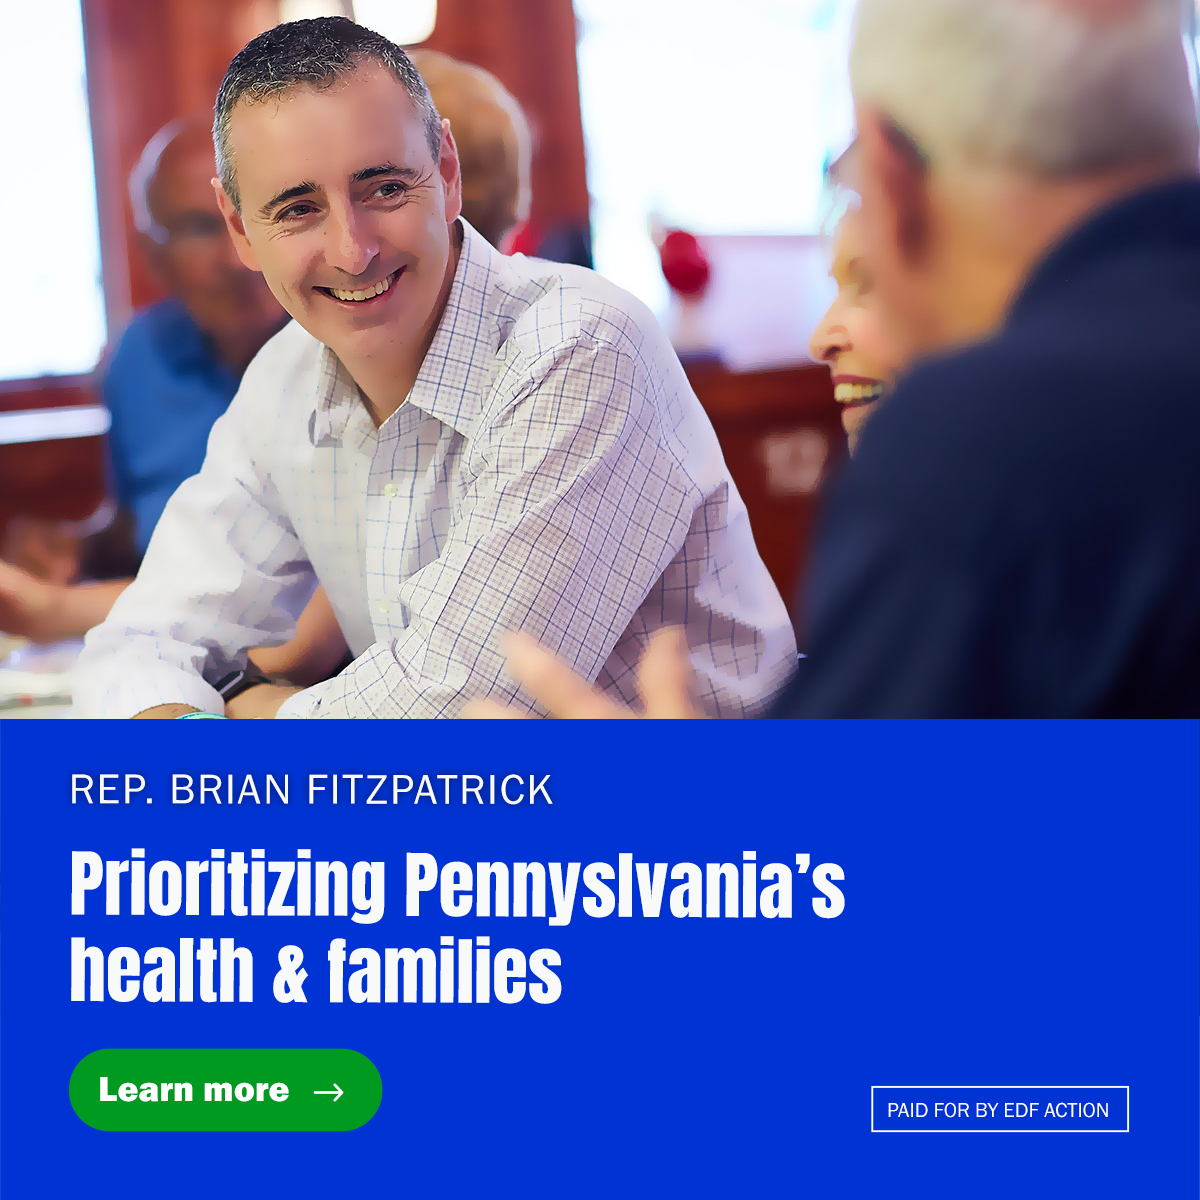 Rep. Fitzpatrick Prioritizing Pennsylvania's Health & Families